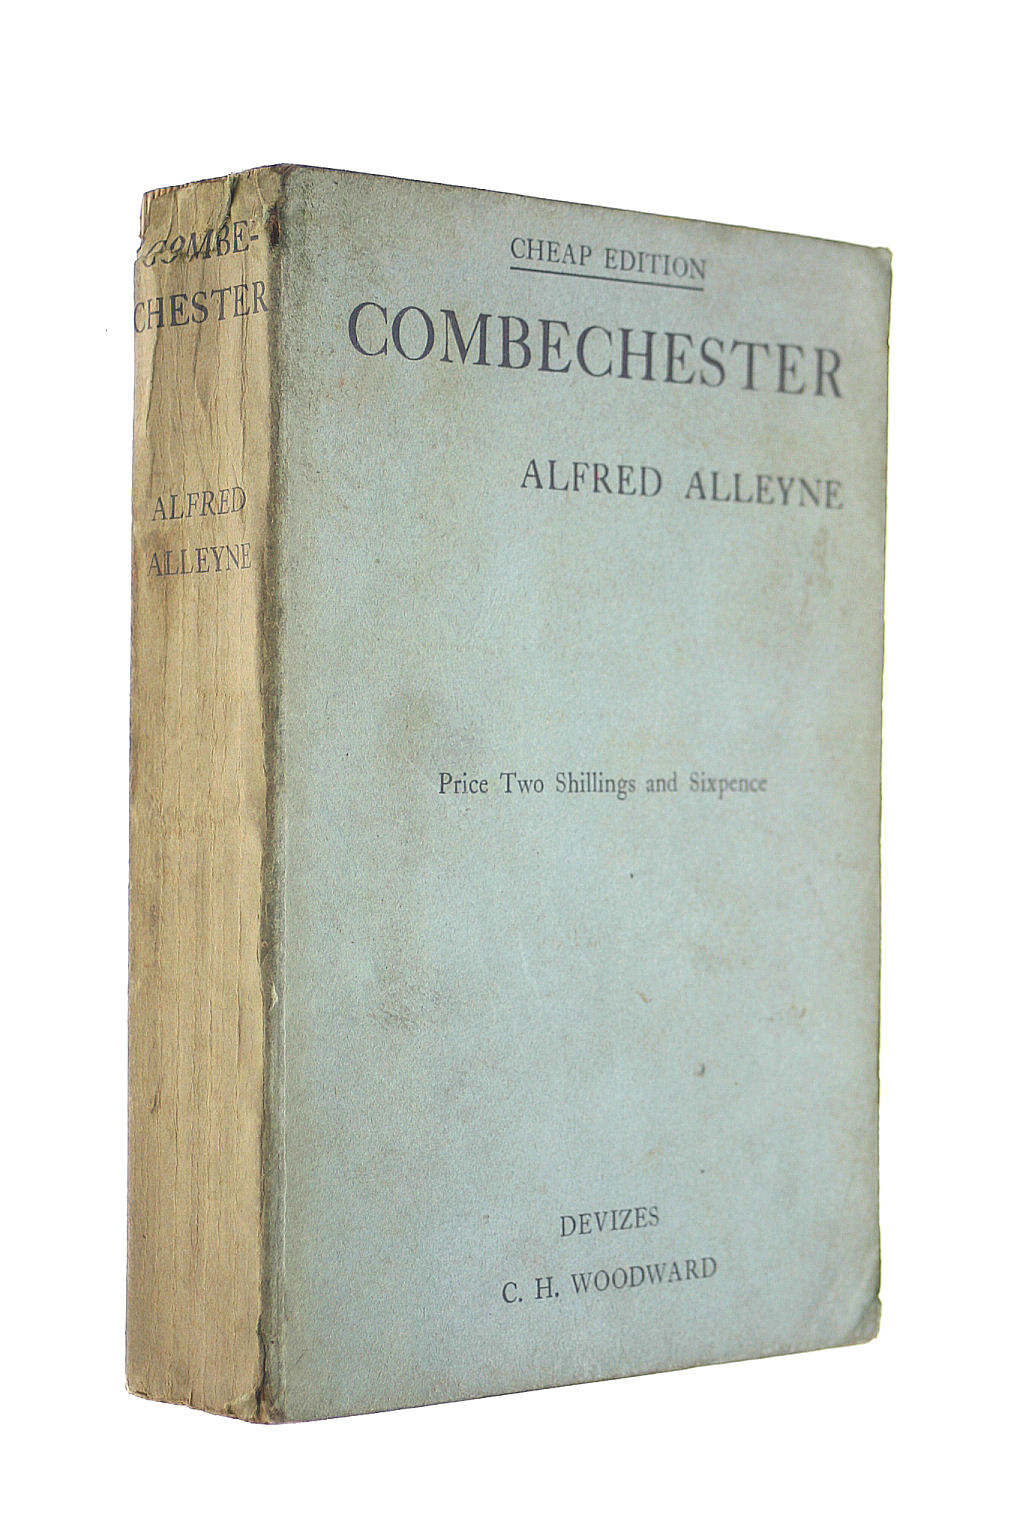 ALFRED ALLEYNE - Combechester